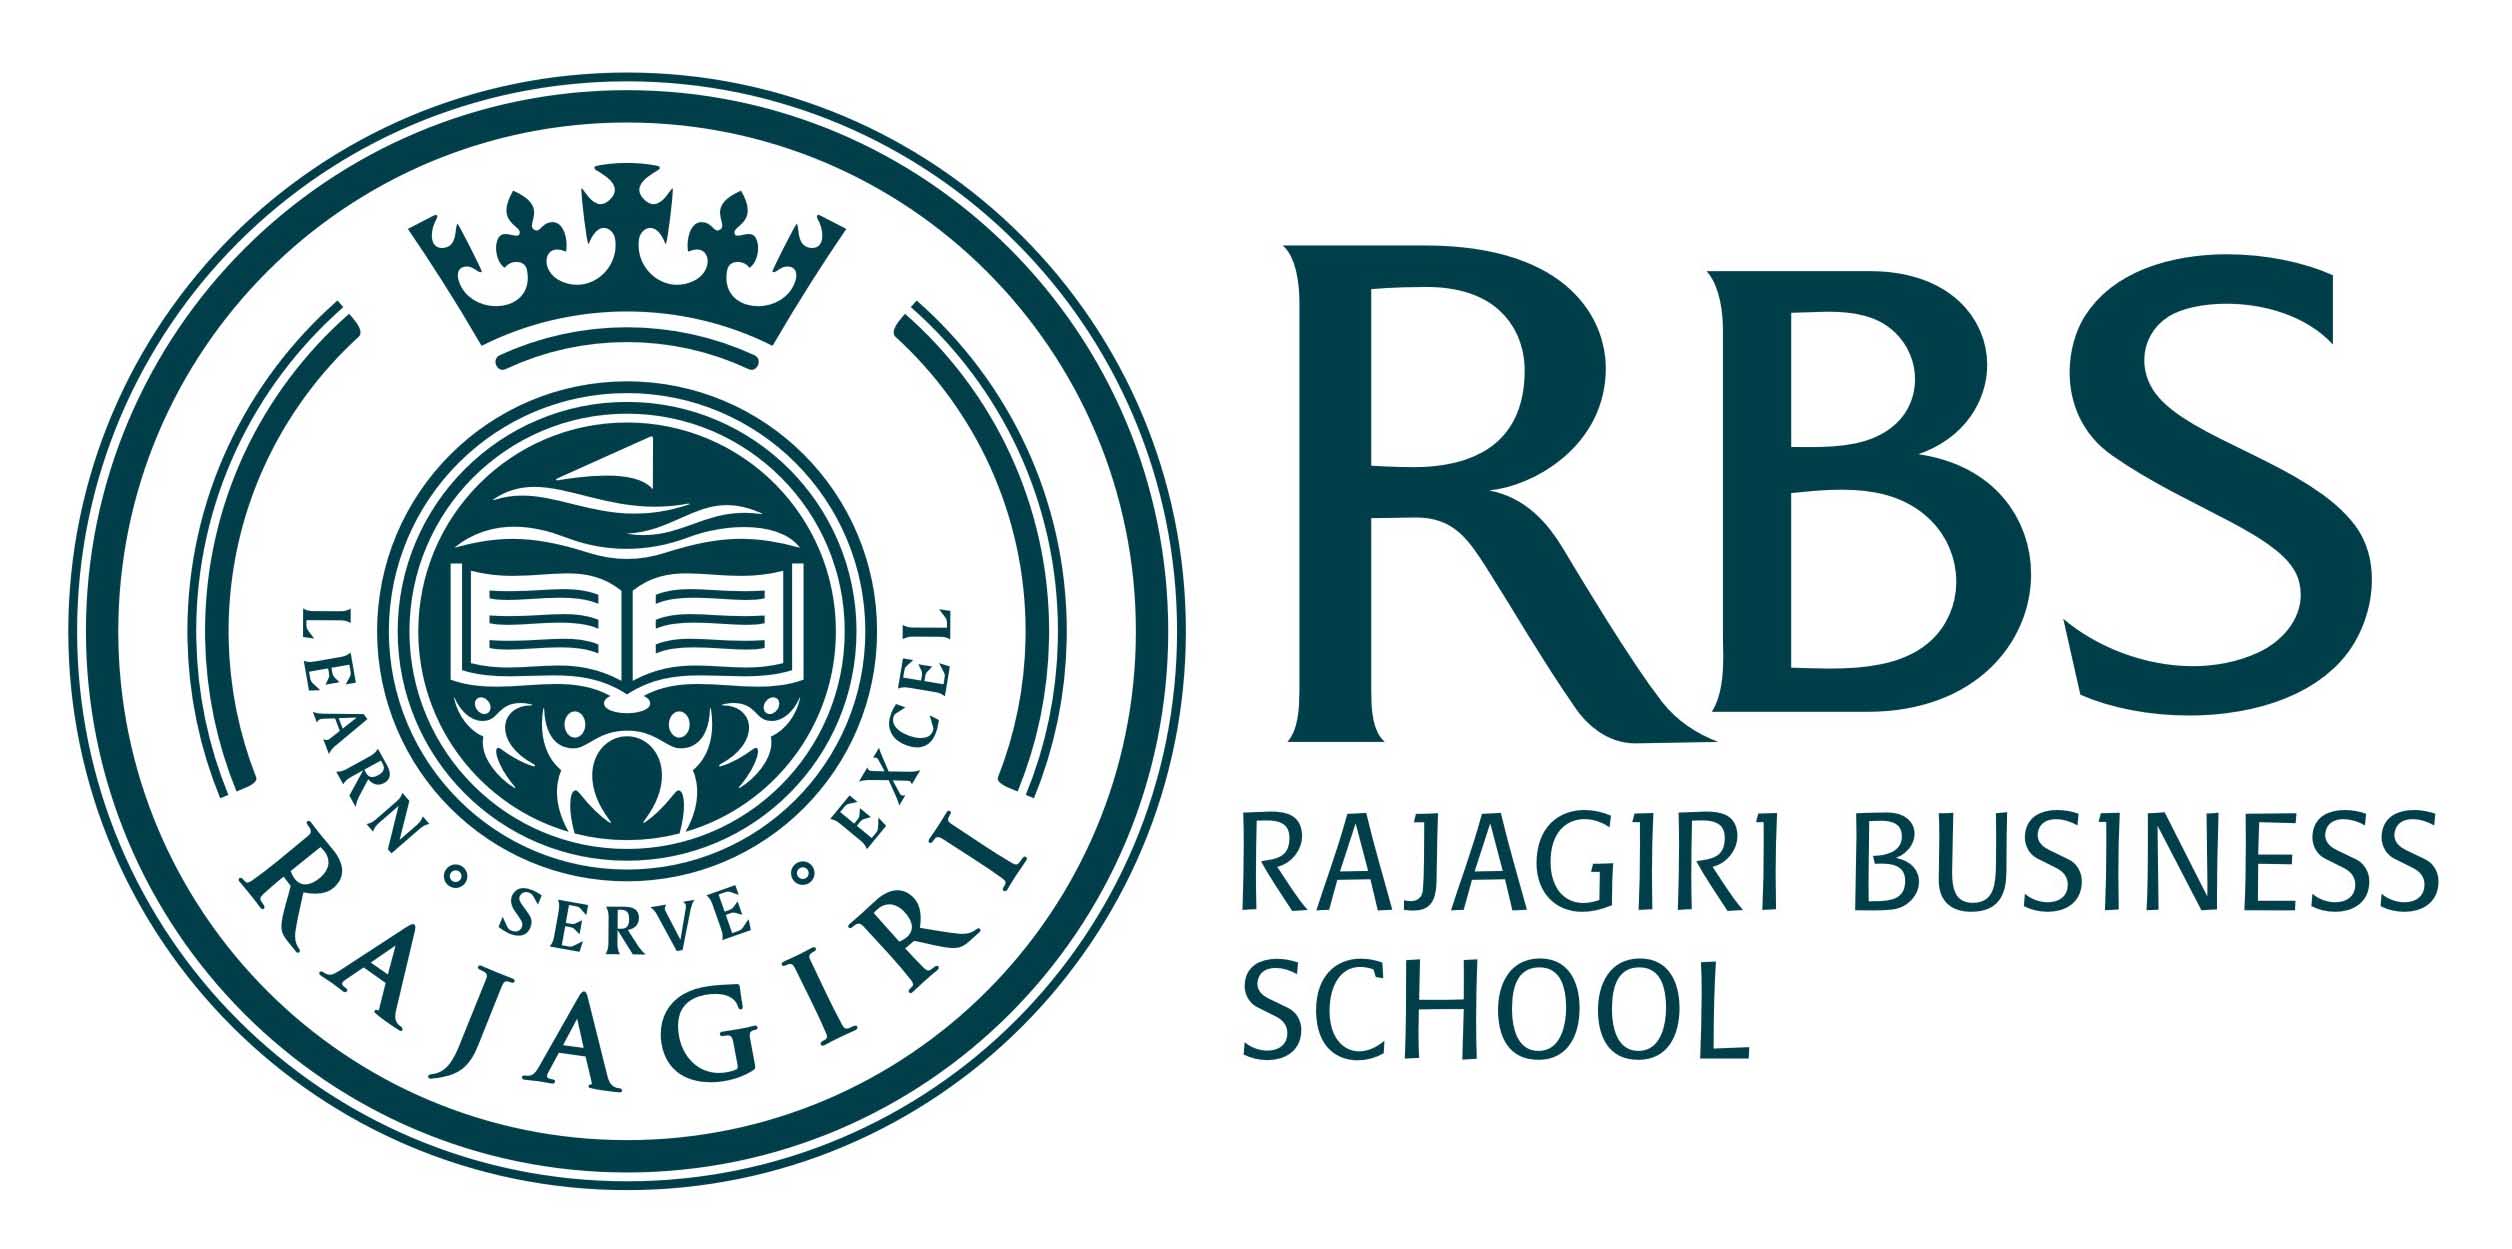 RAJAGIRI BUSINESS SCHOOL